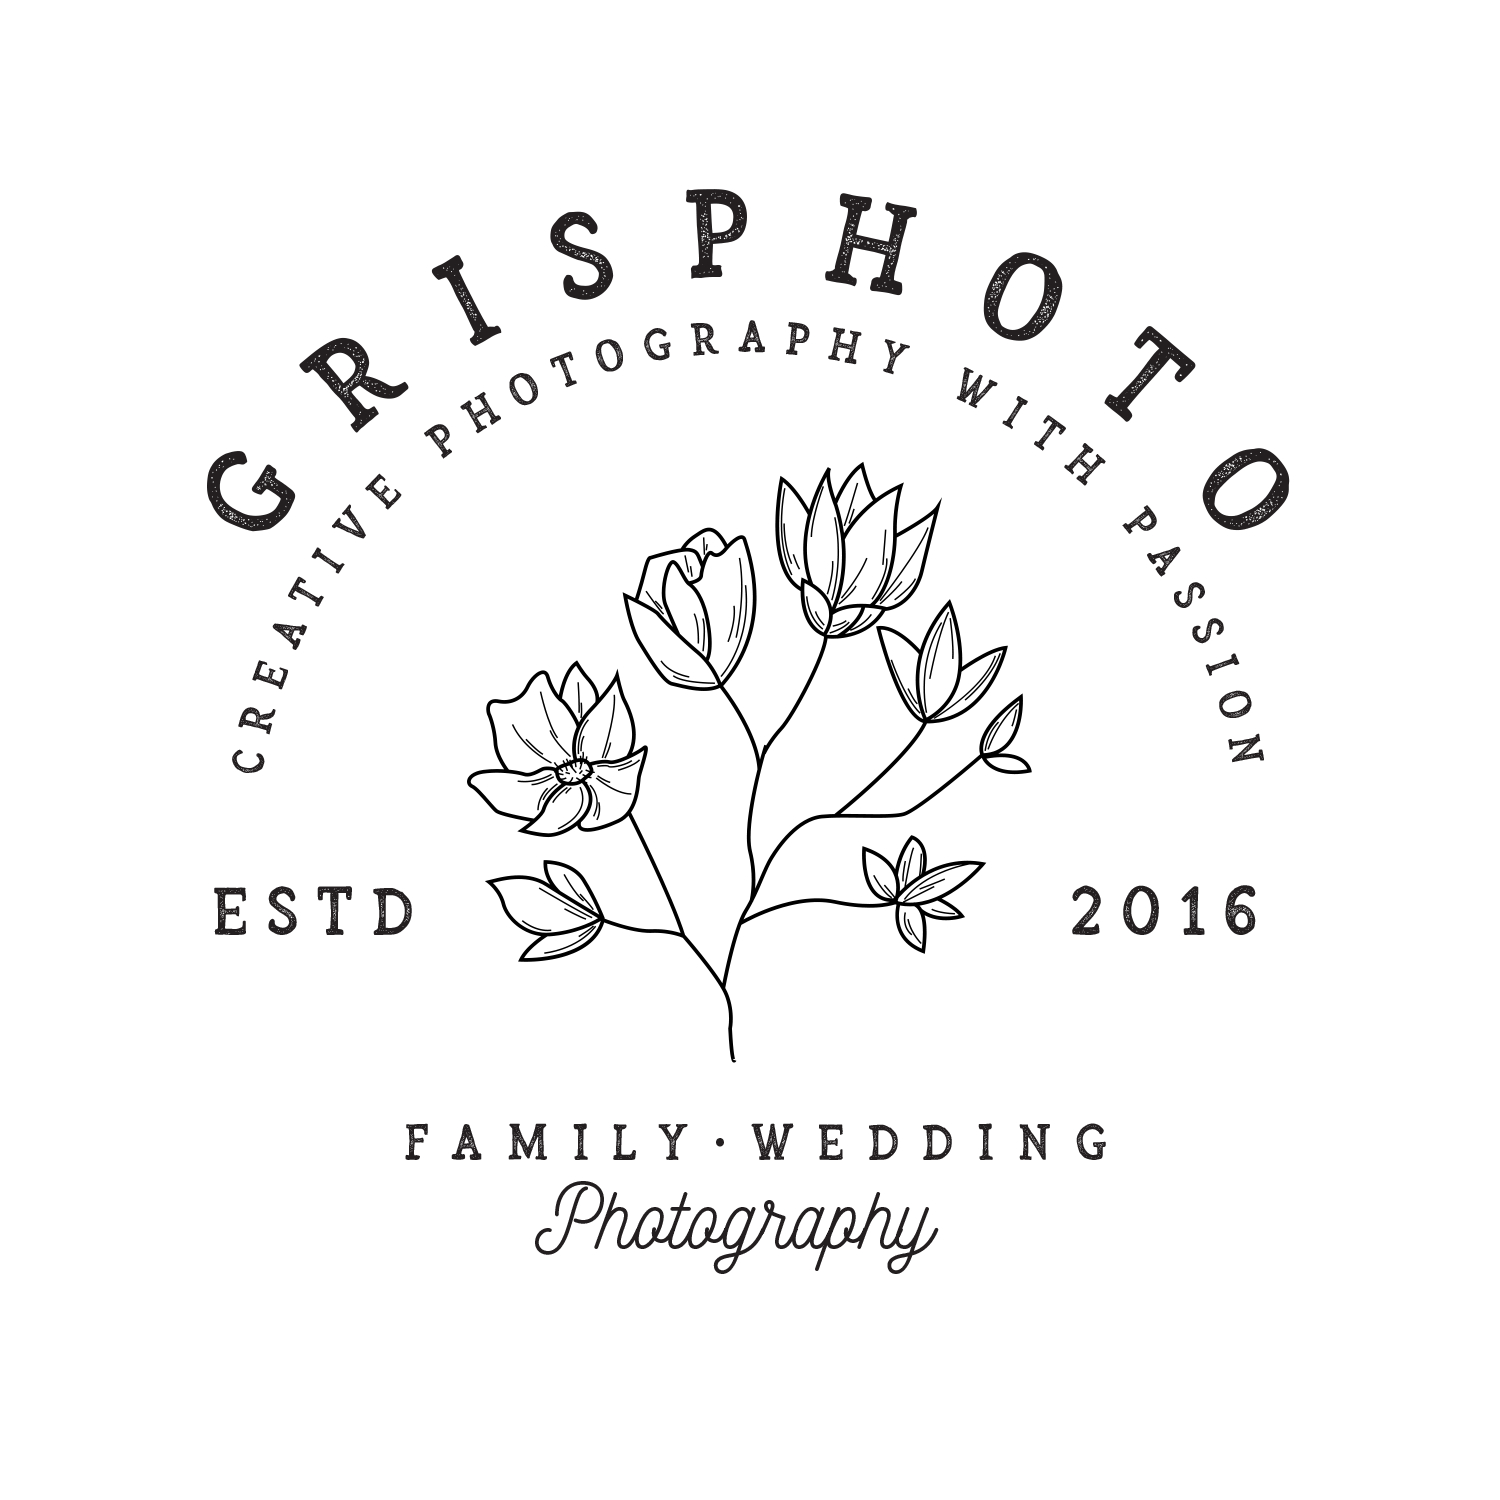 Grisphoto